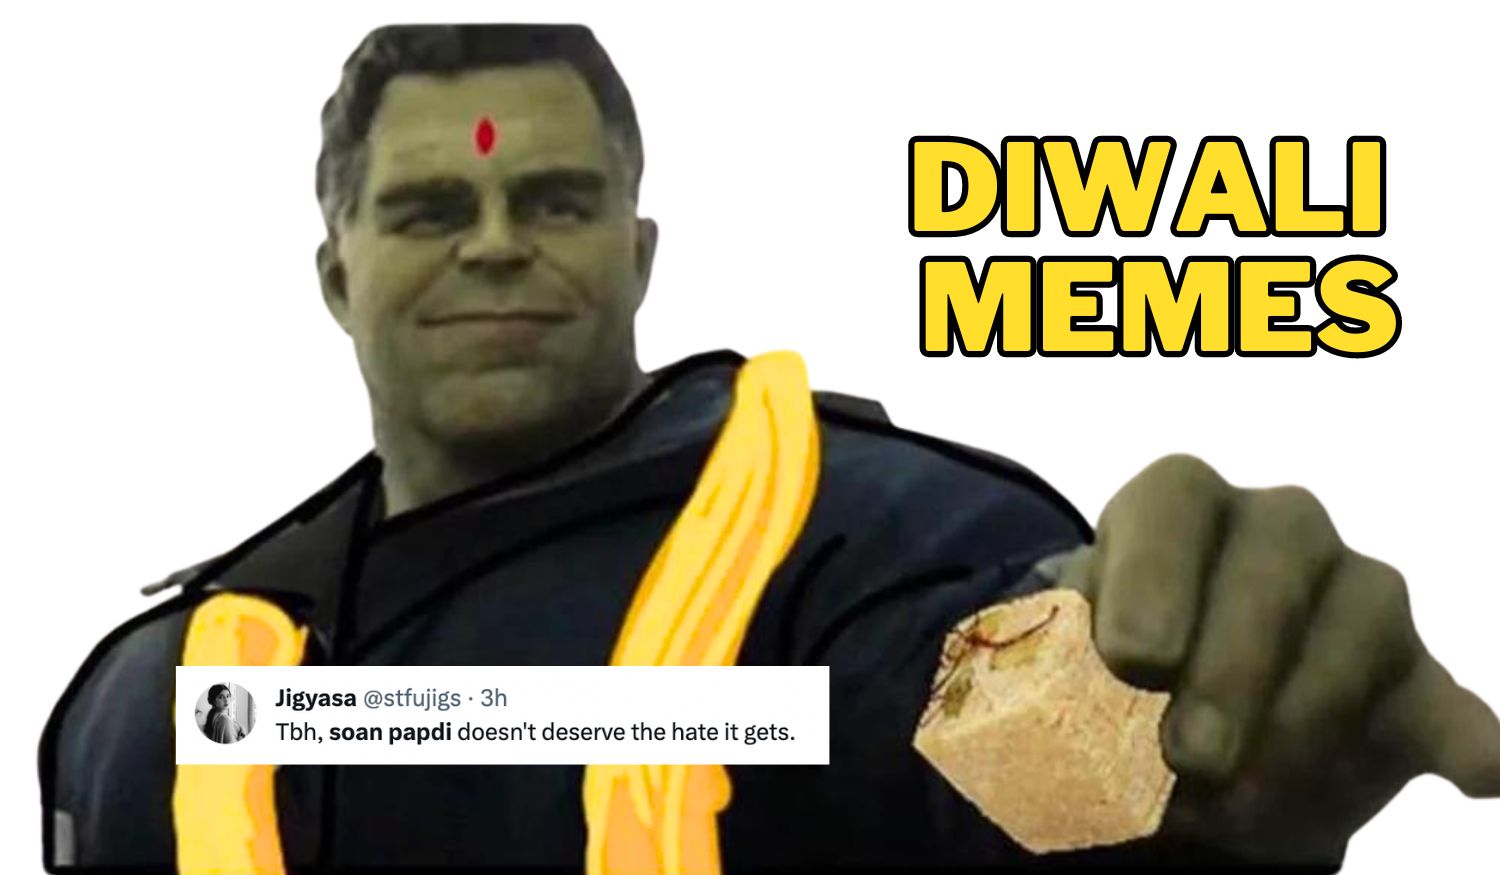 Diwali memes Archives - MemeHeist